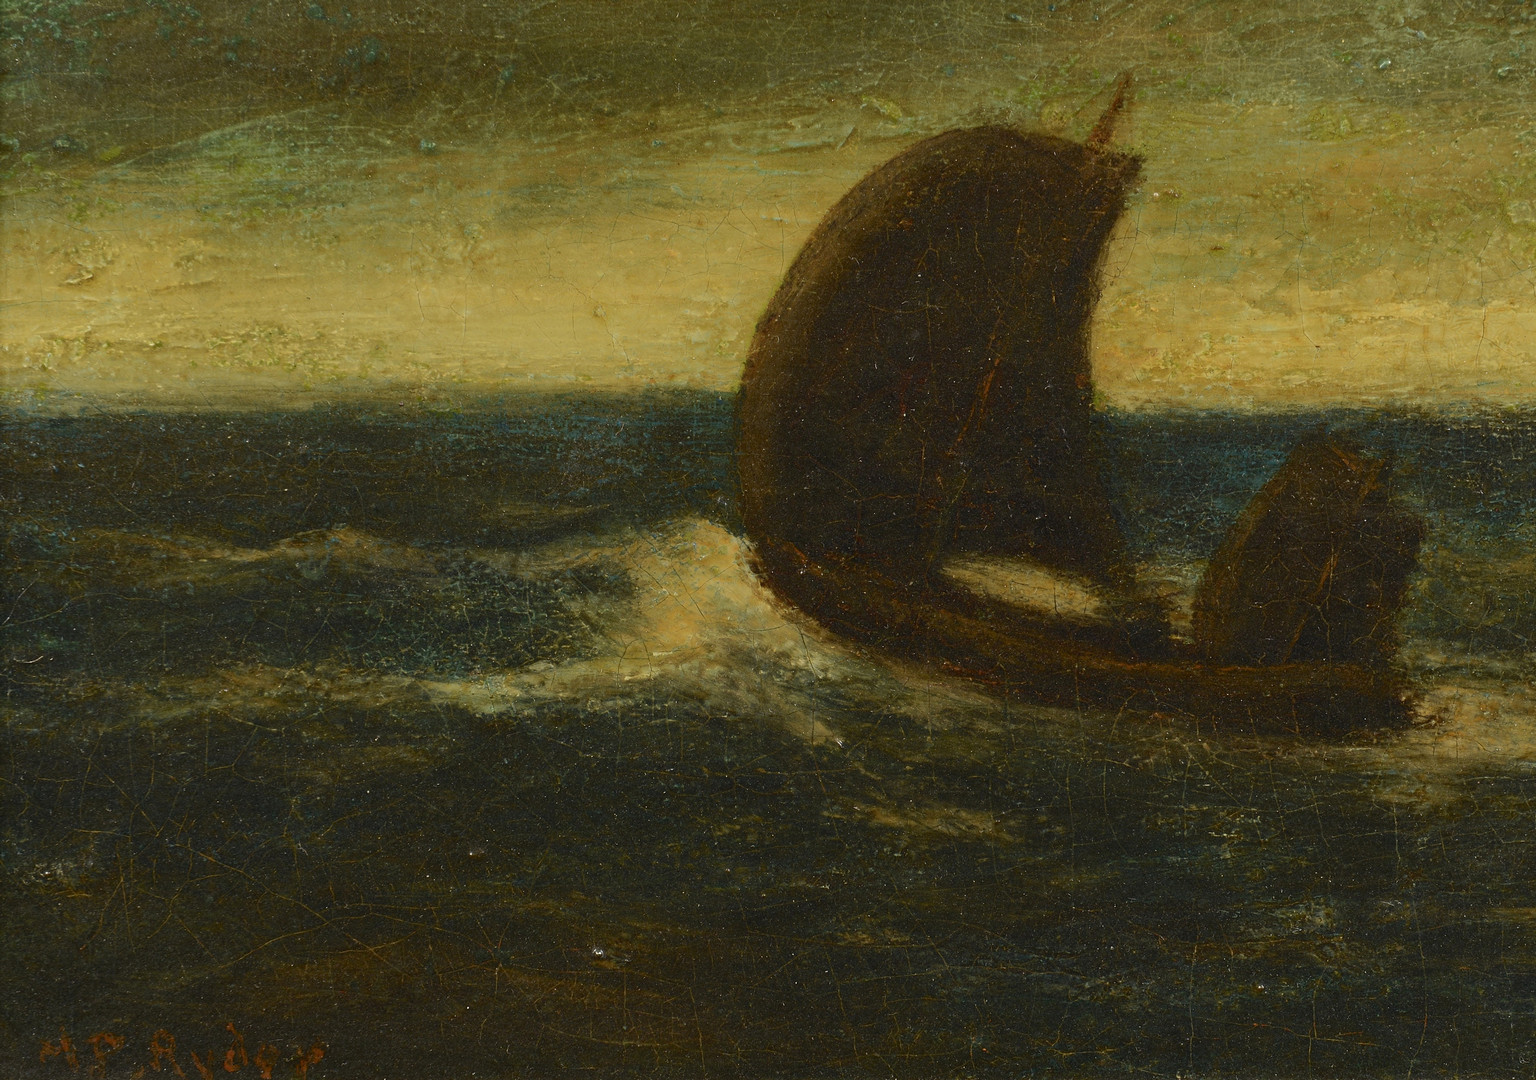 Lot 179: Albert Pinkham Ryder, "Boat at Sea"